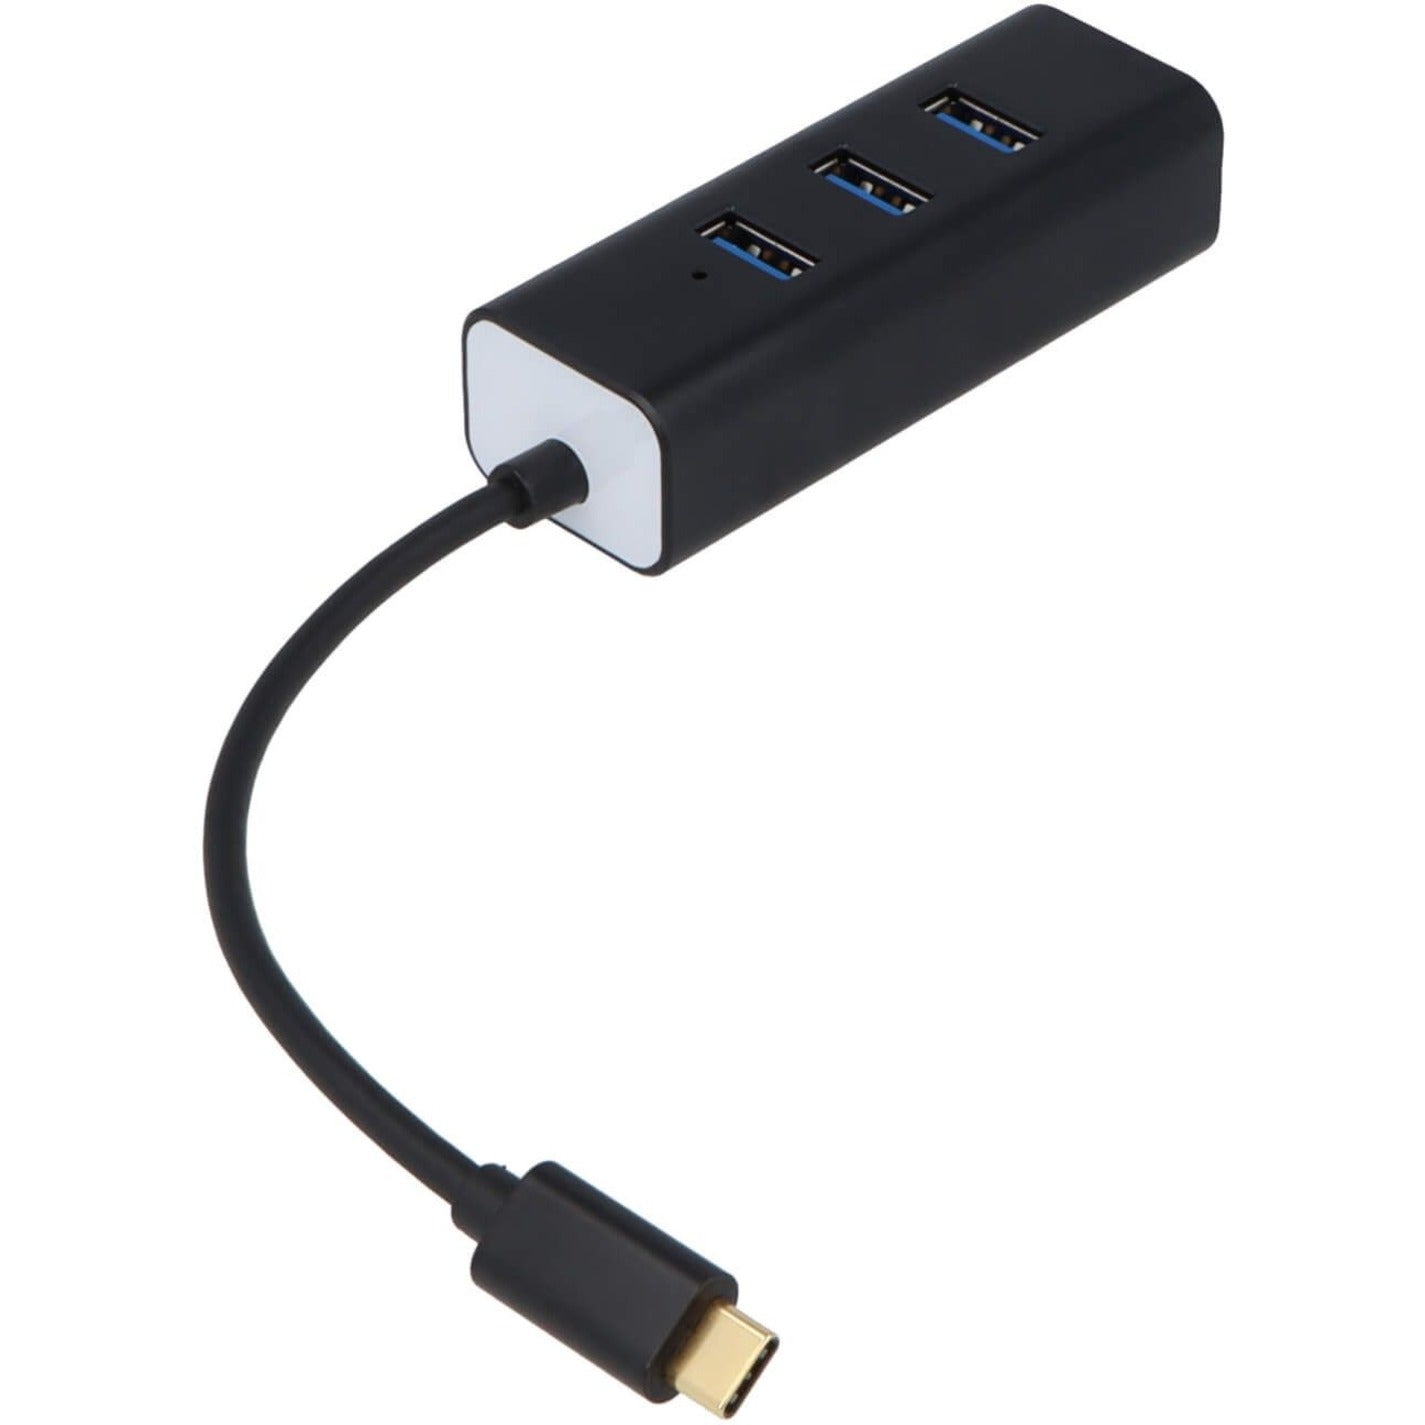 VisionTek 901434 USB-C 4 Port USB 3.0 Hub, Mac/PC Compatible, 1 Year Warranty